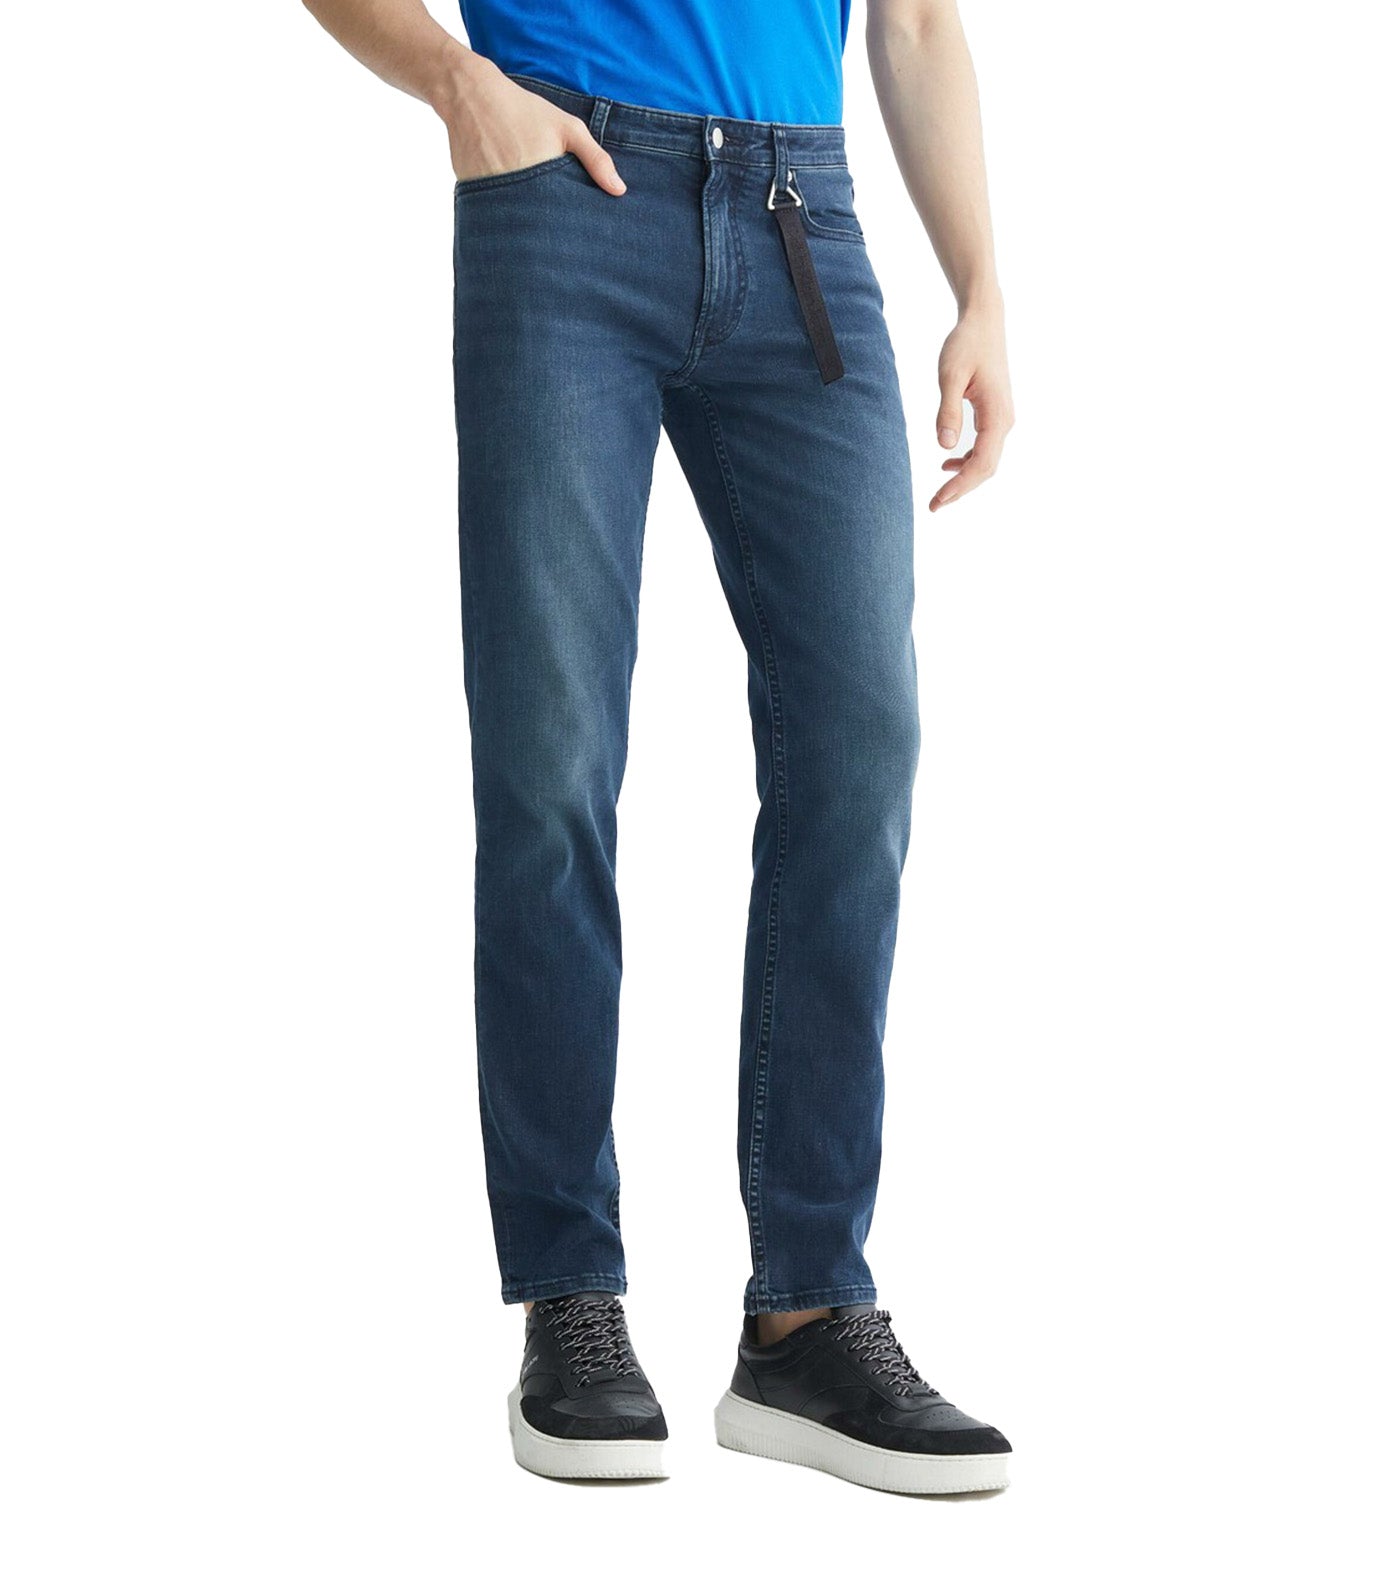 37.5 Body 5 Pocket Jeans Denim Blue